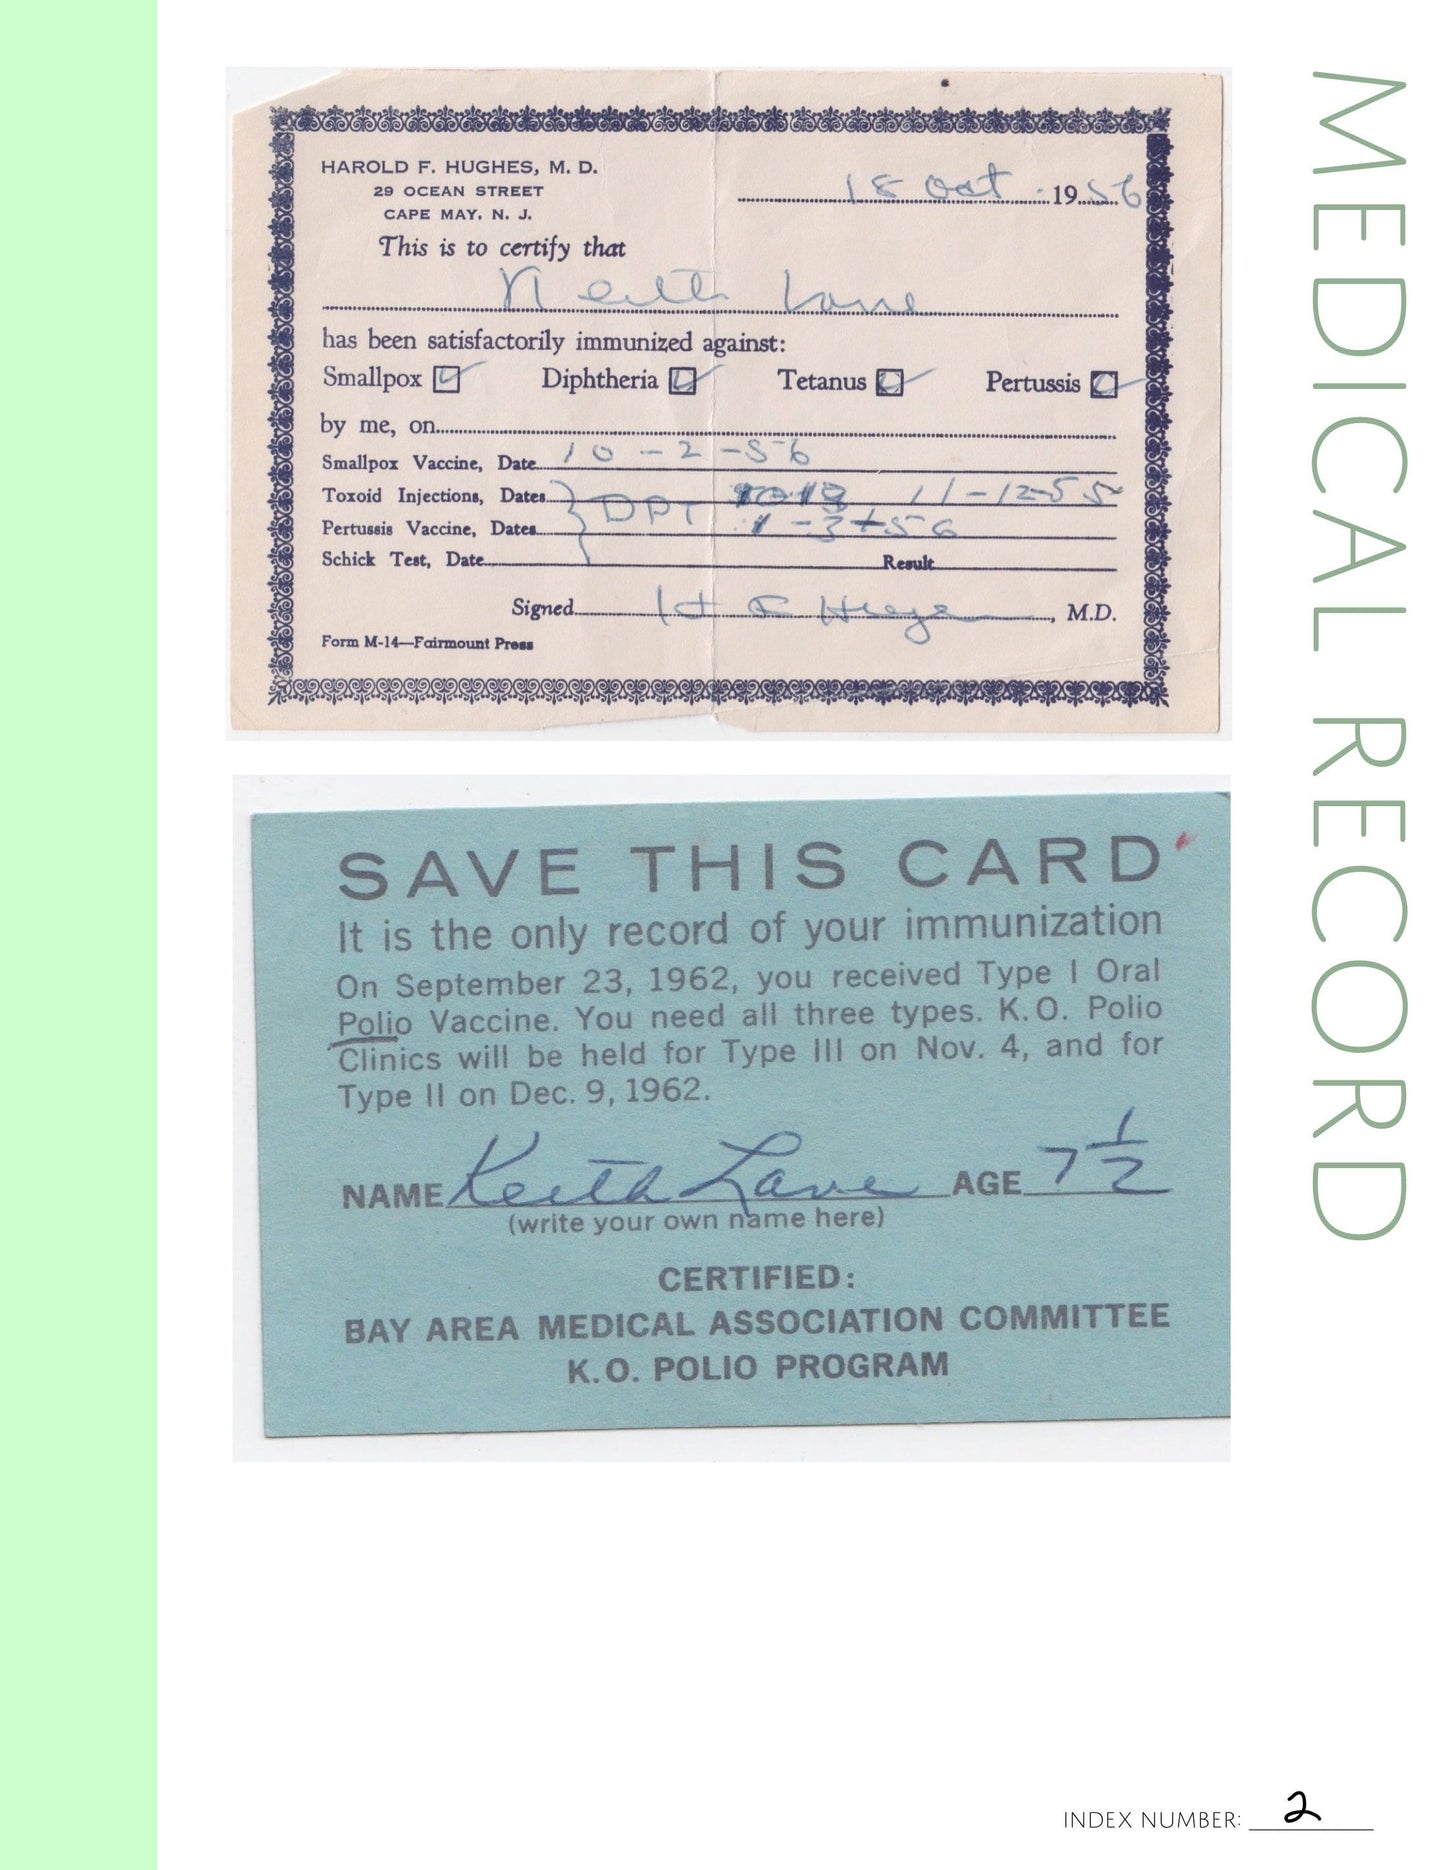 Medical Record Page: Printable Genealogy Form (Digital Download)